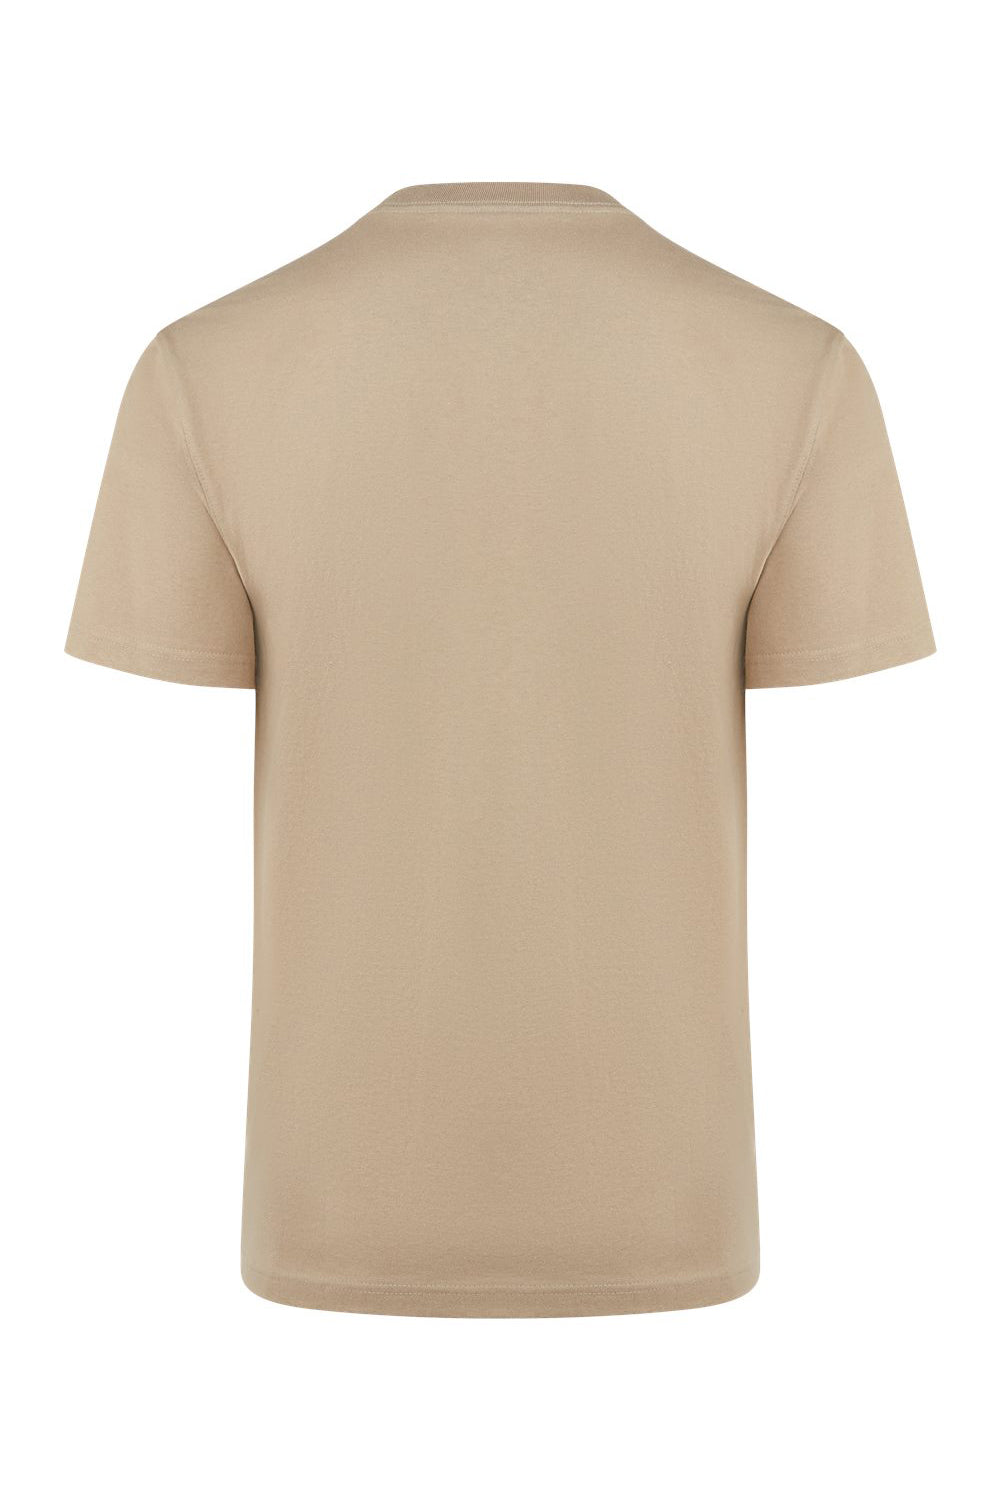 Dickies WS50-D Mens Traditional Short Sleeve Crewneck T-Shirt w/ Pocket Desert Sand Flat Back